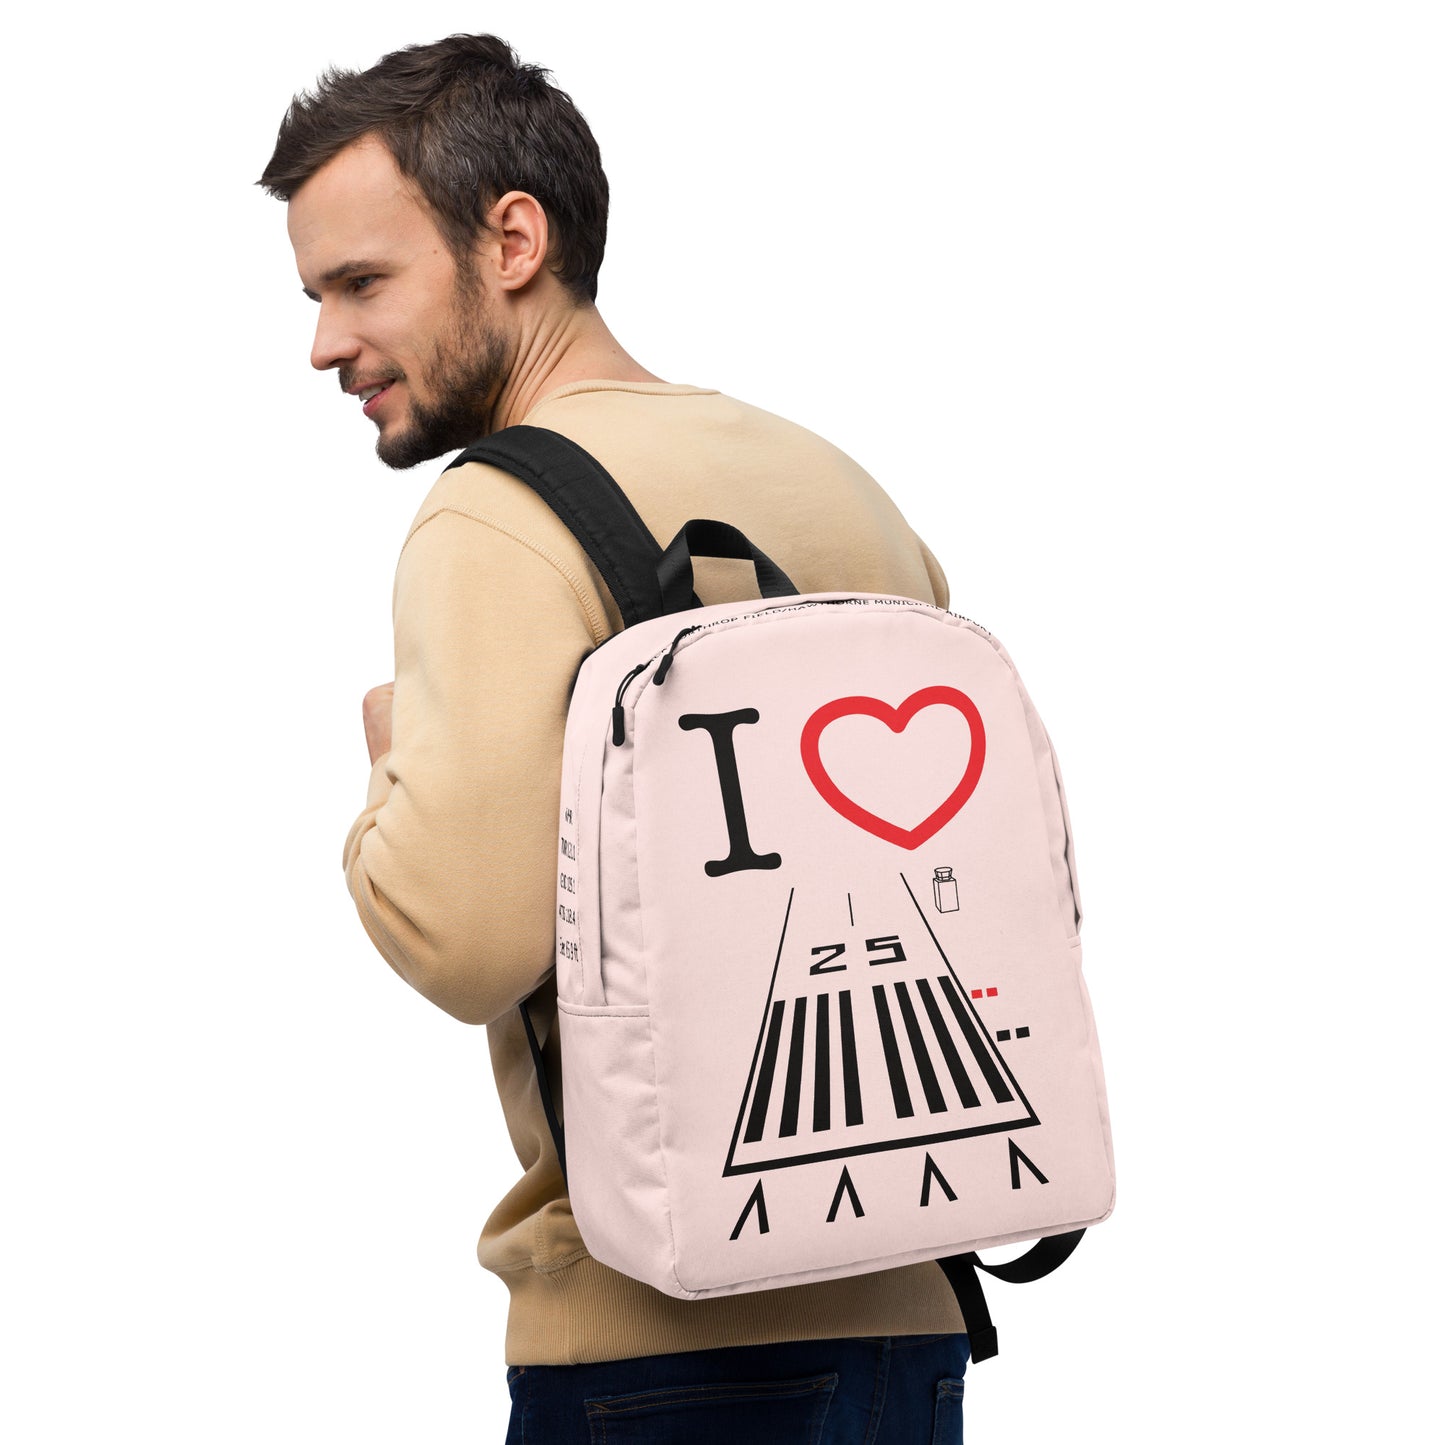 Hawthorne Airport Runway 25 - light pink minimalist backpack